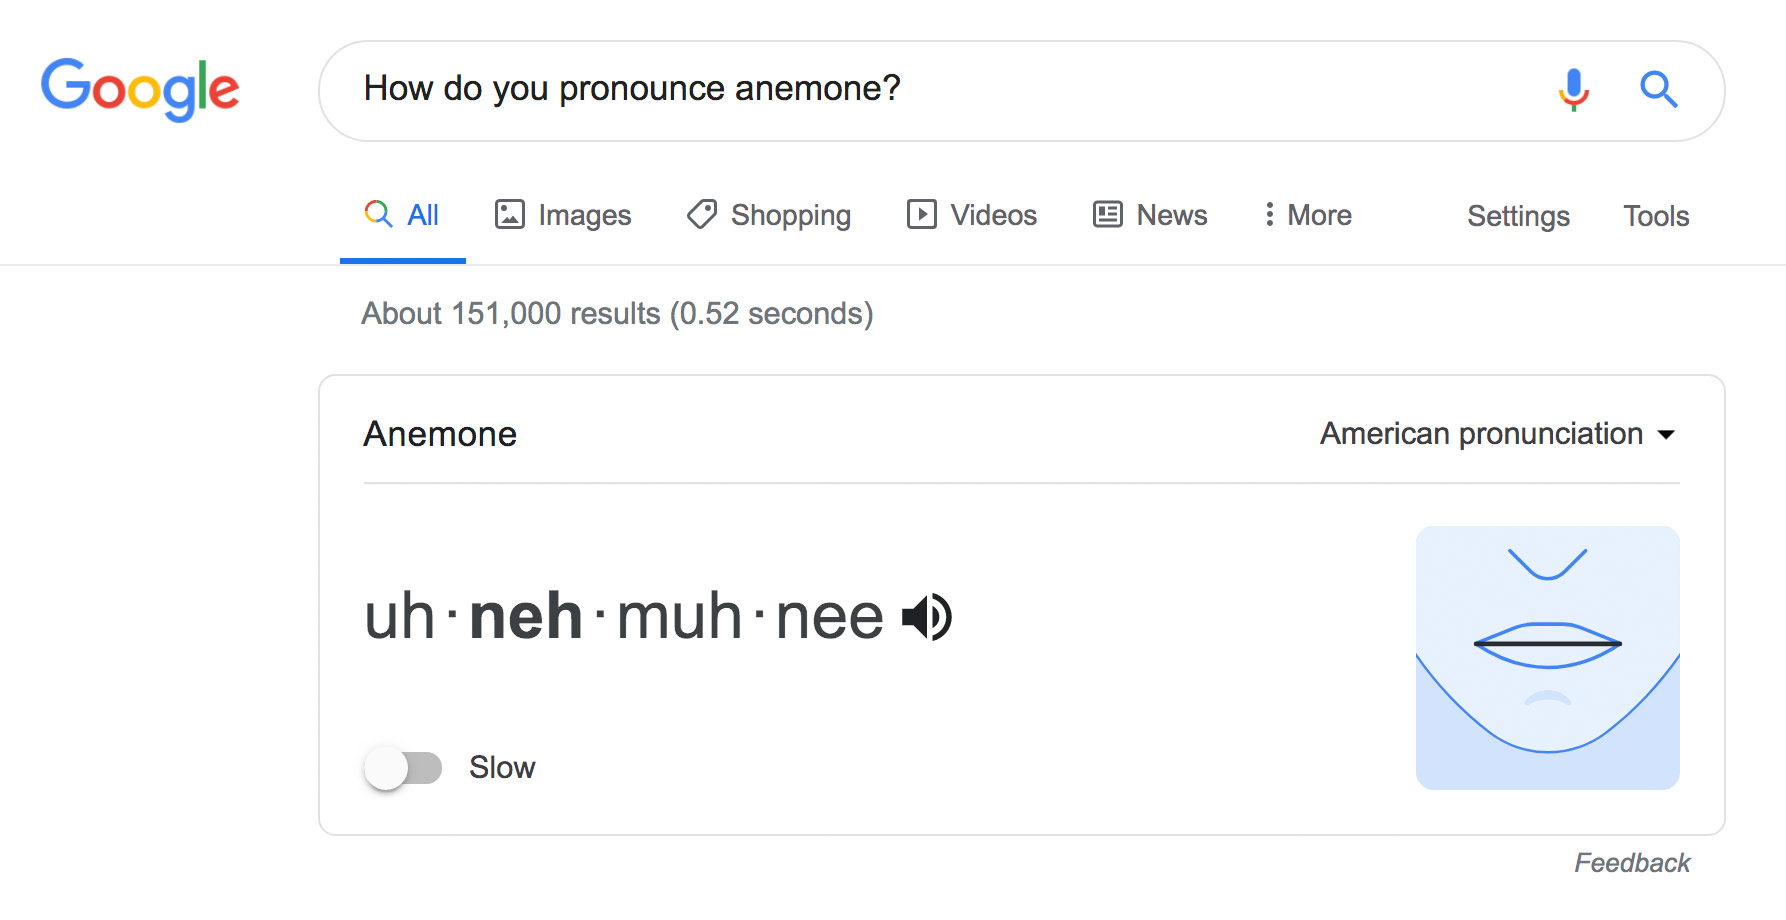 How do you pronounce anemone?